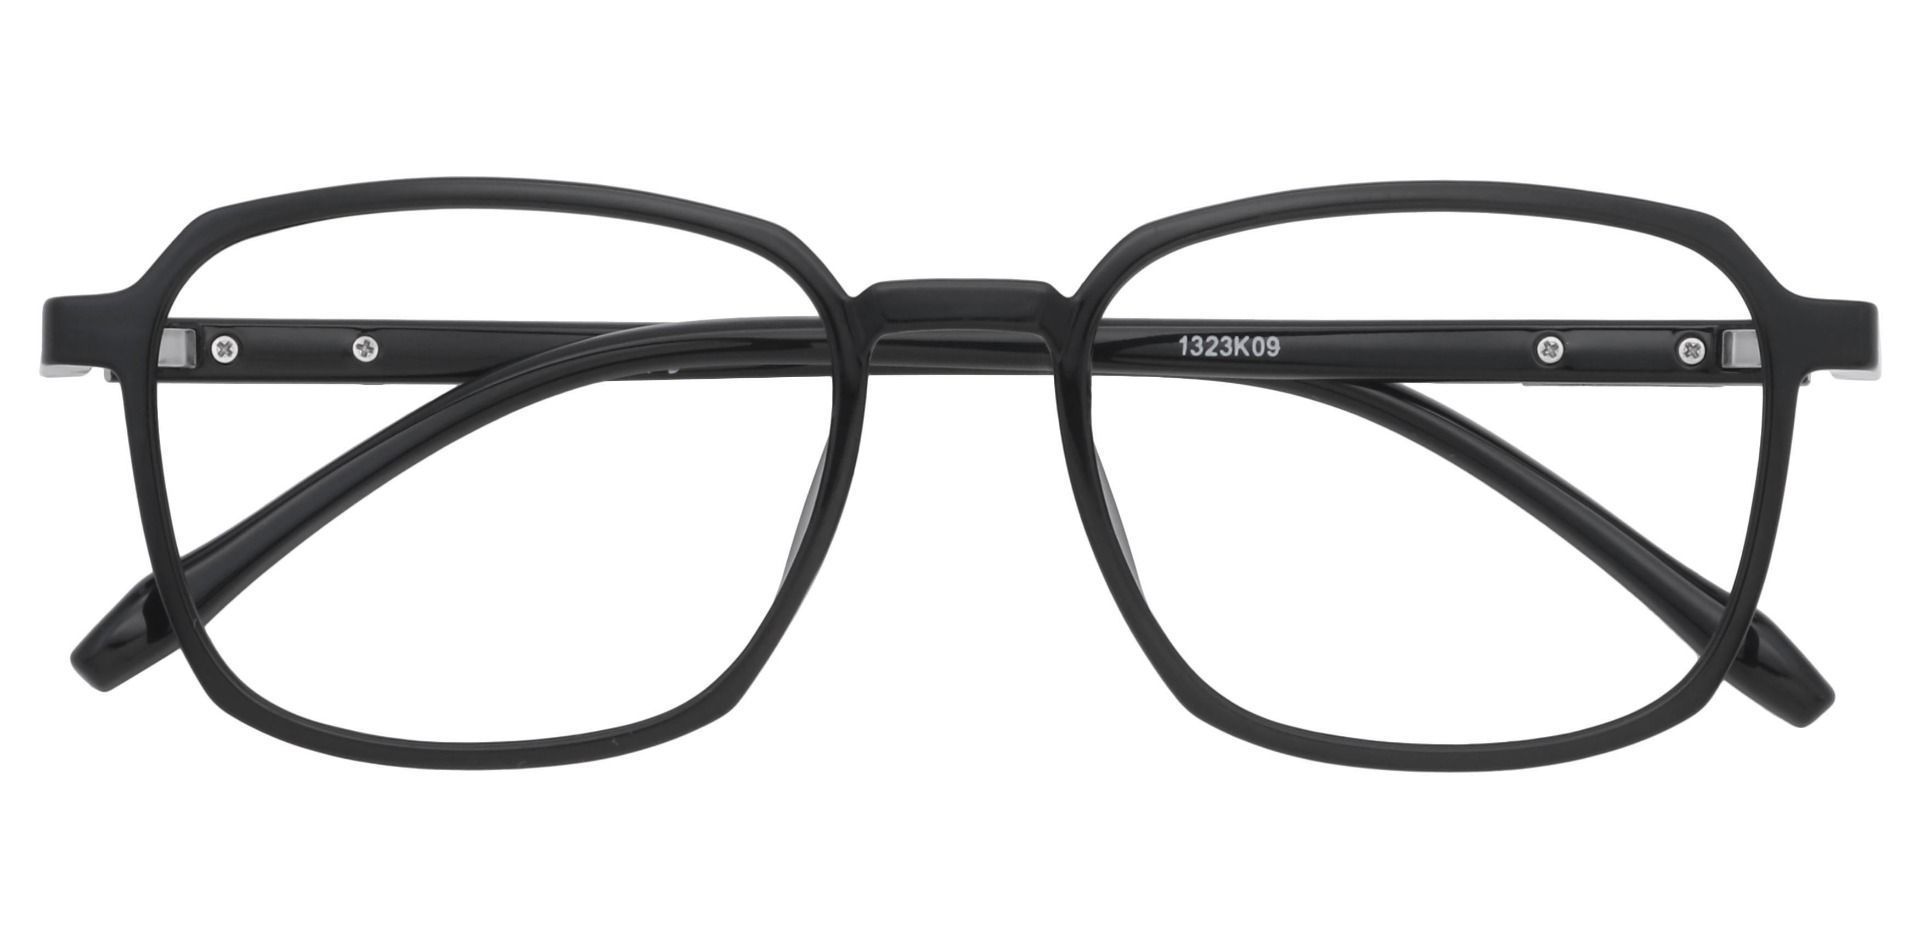 Stella Square Eyeglasses Frame - Black